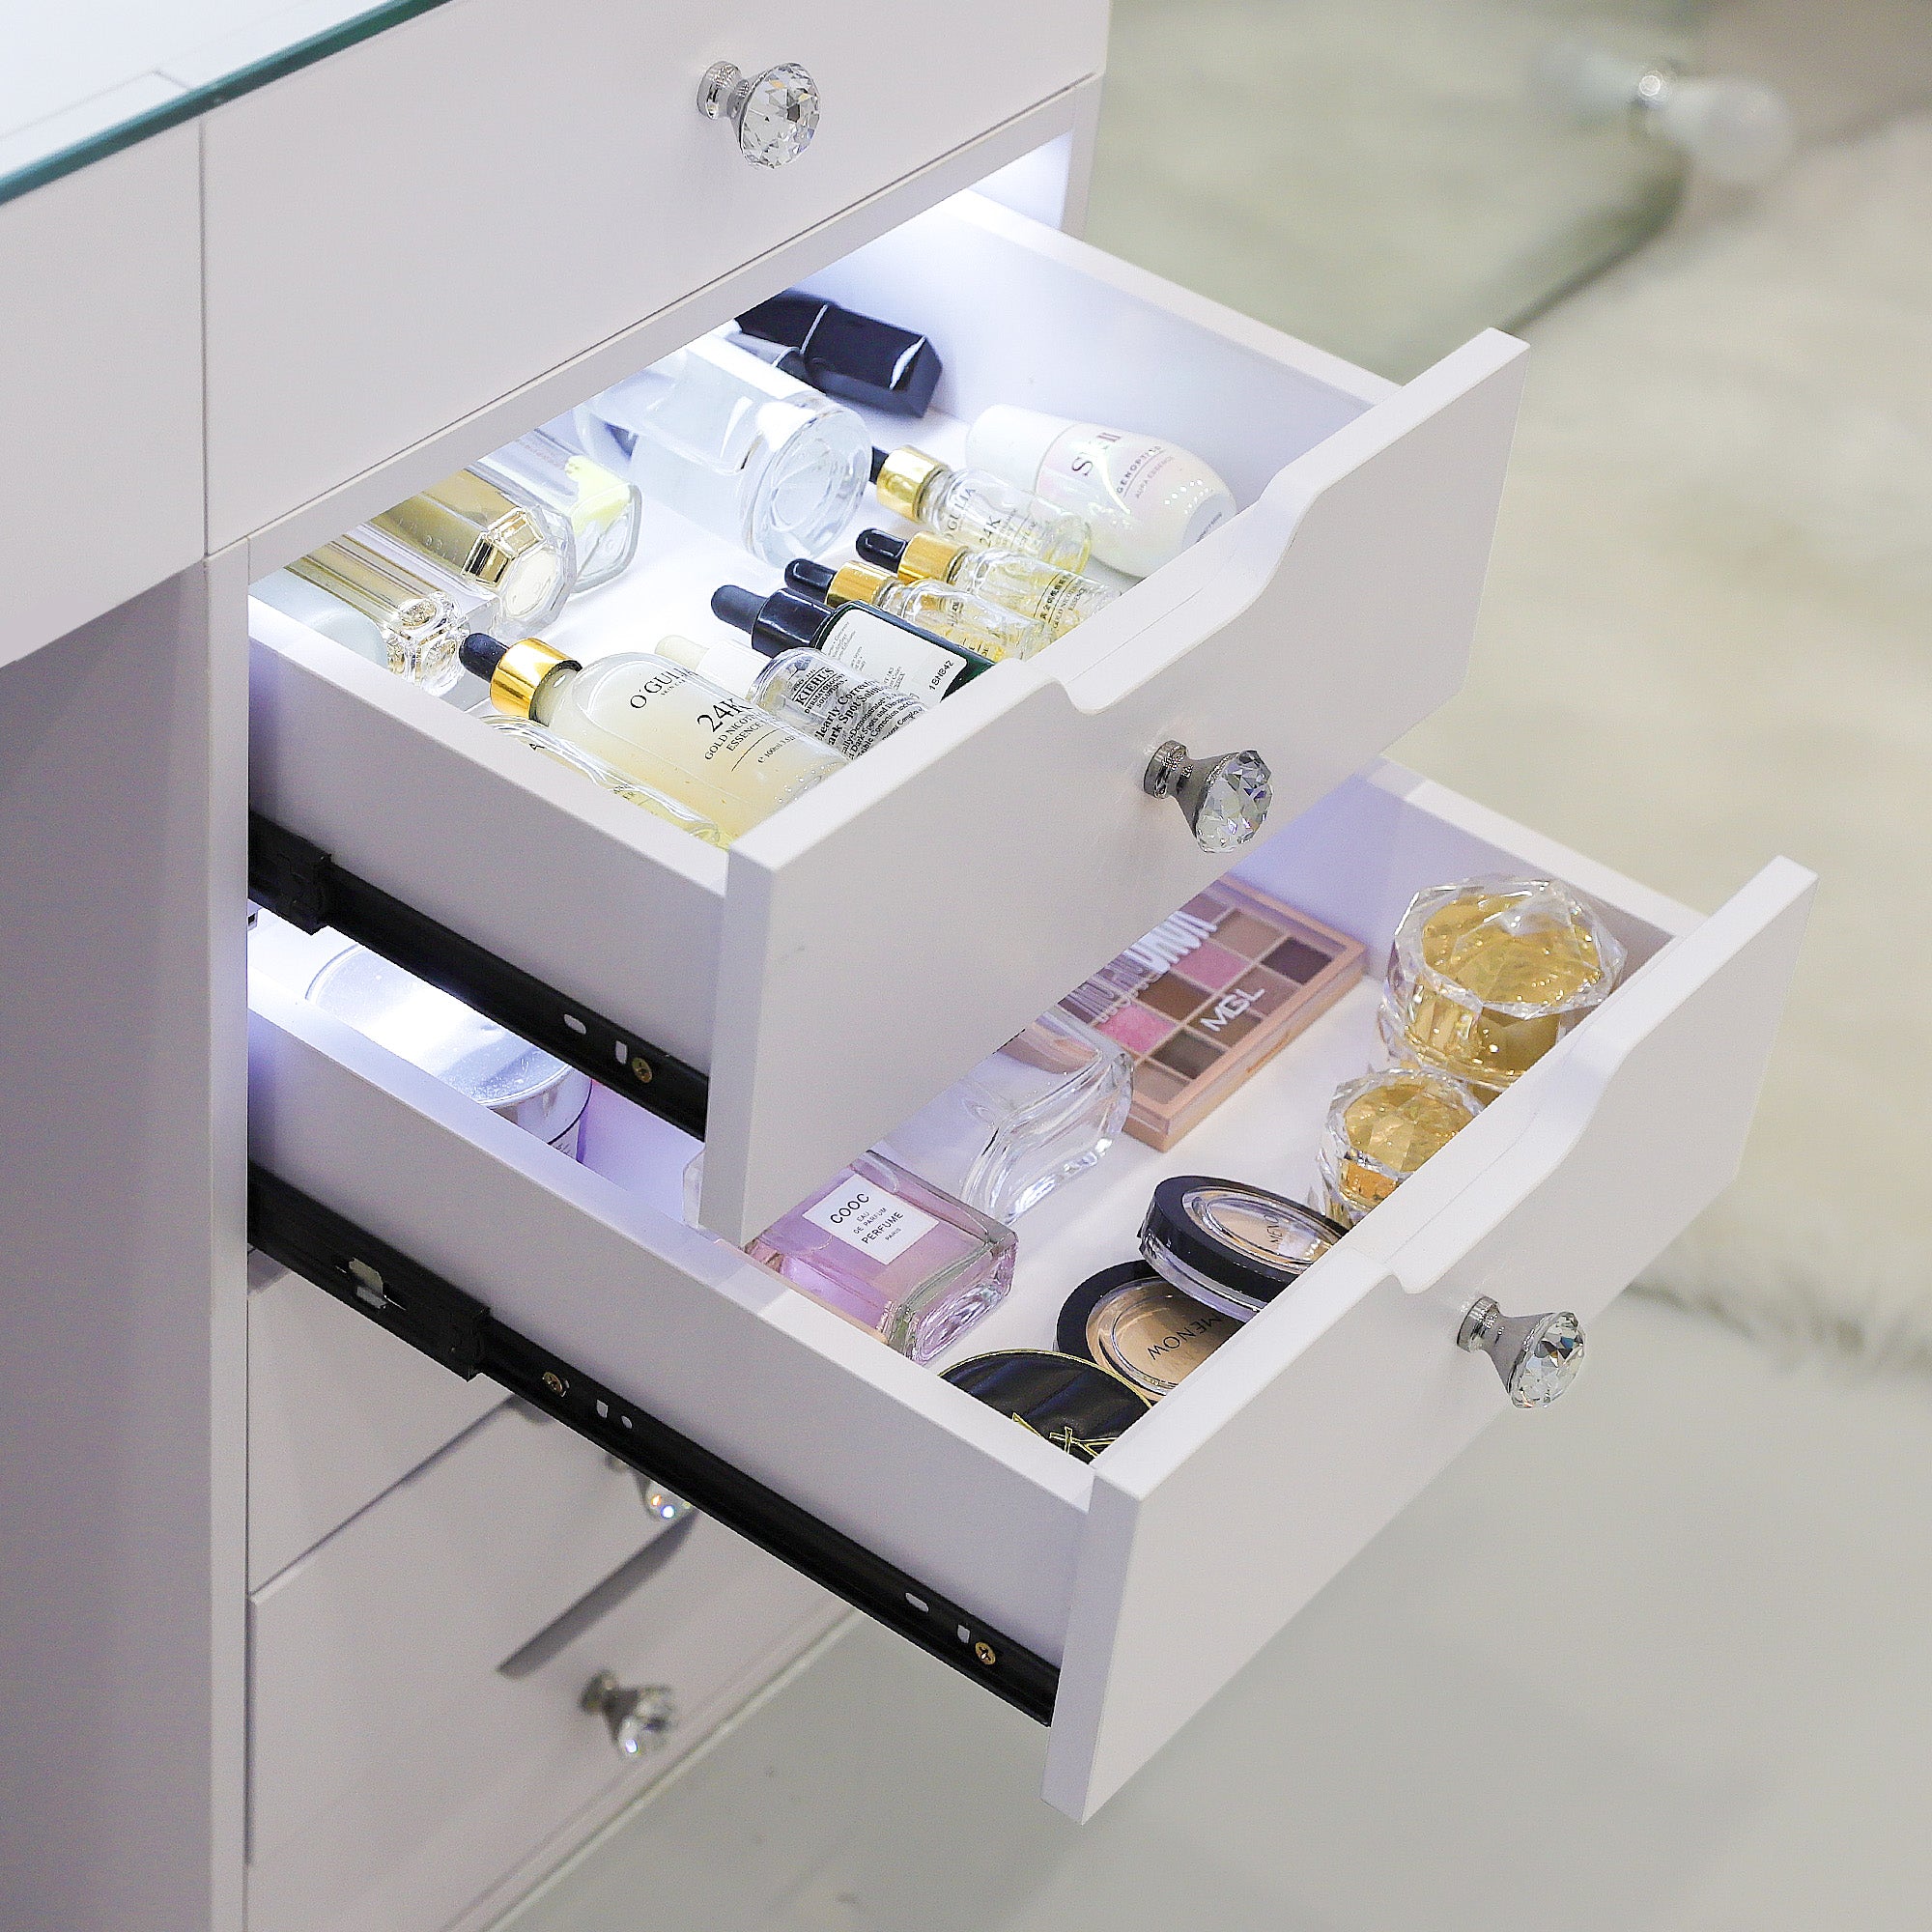 VANITII Eva Vanity Desk  - 13 Storage Drawers with Full Light &RGB